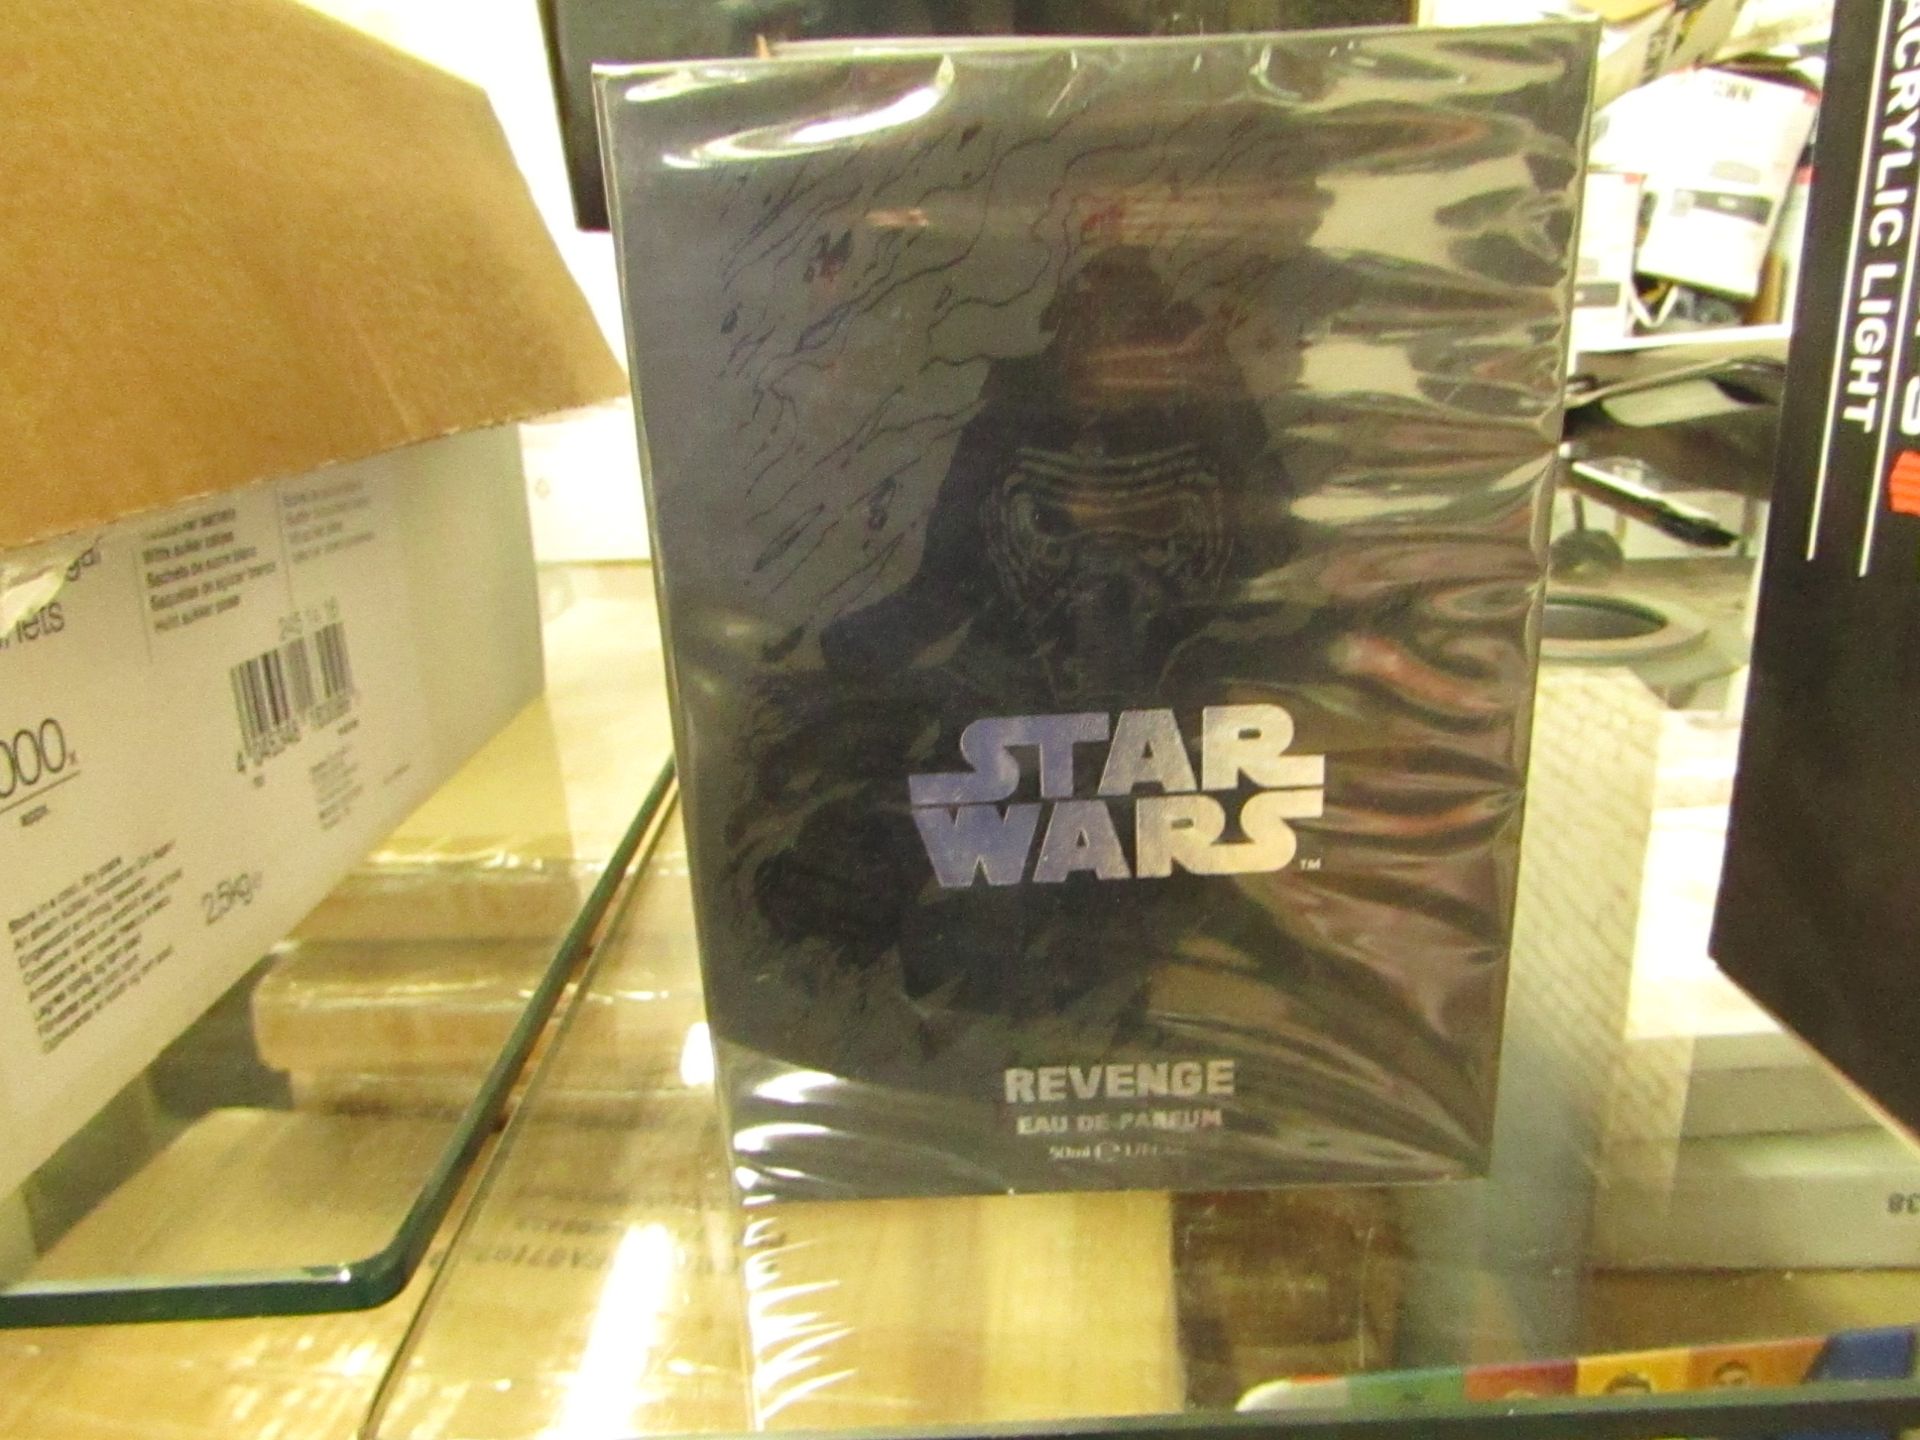 Star Wars Revenge Eau De Parfum 50ml. New & Packaged